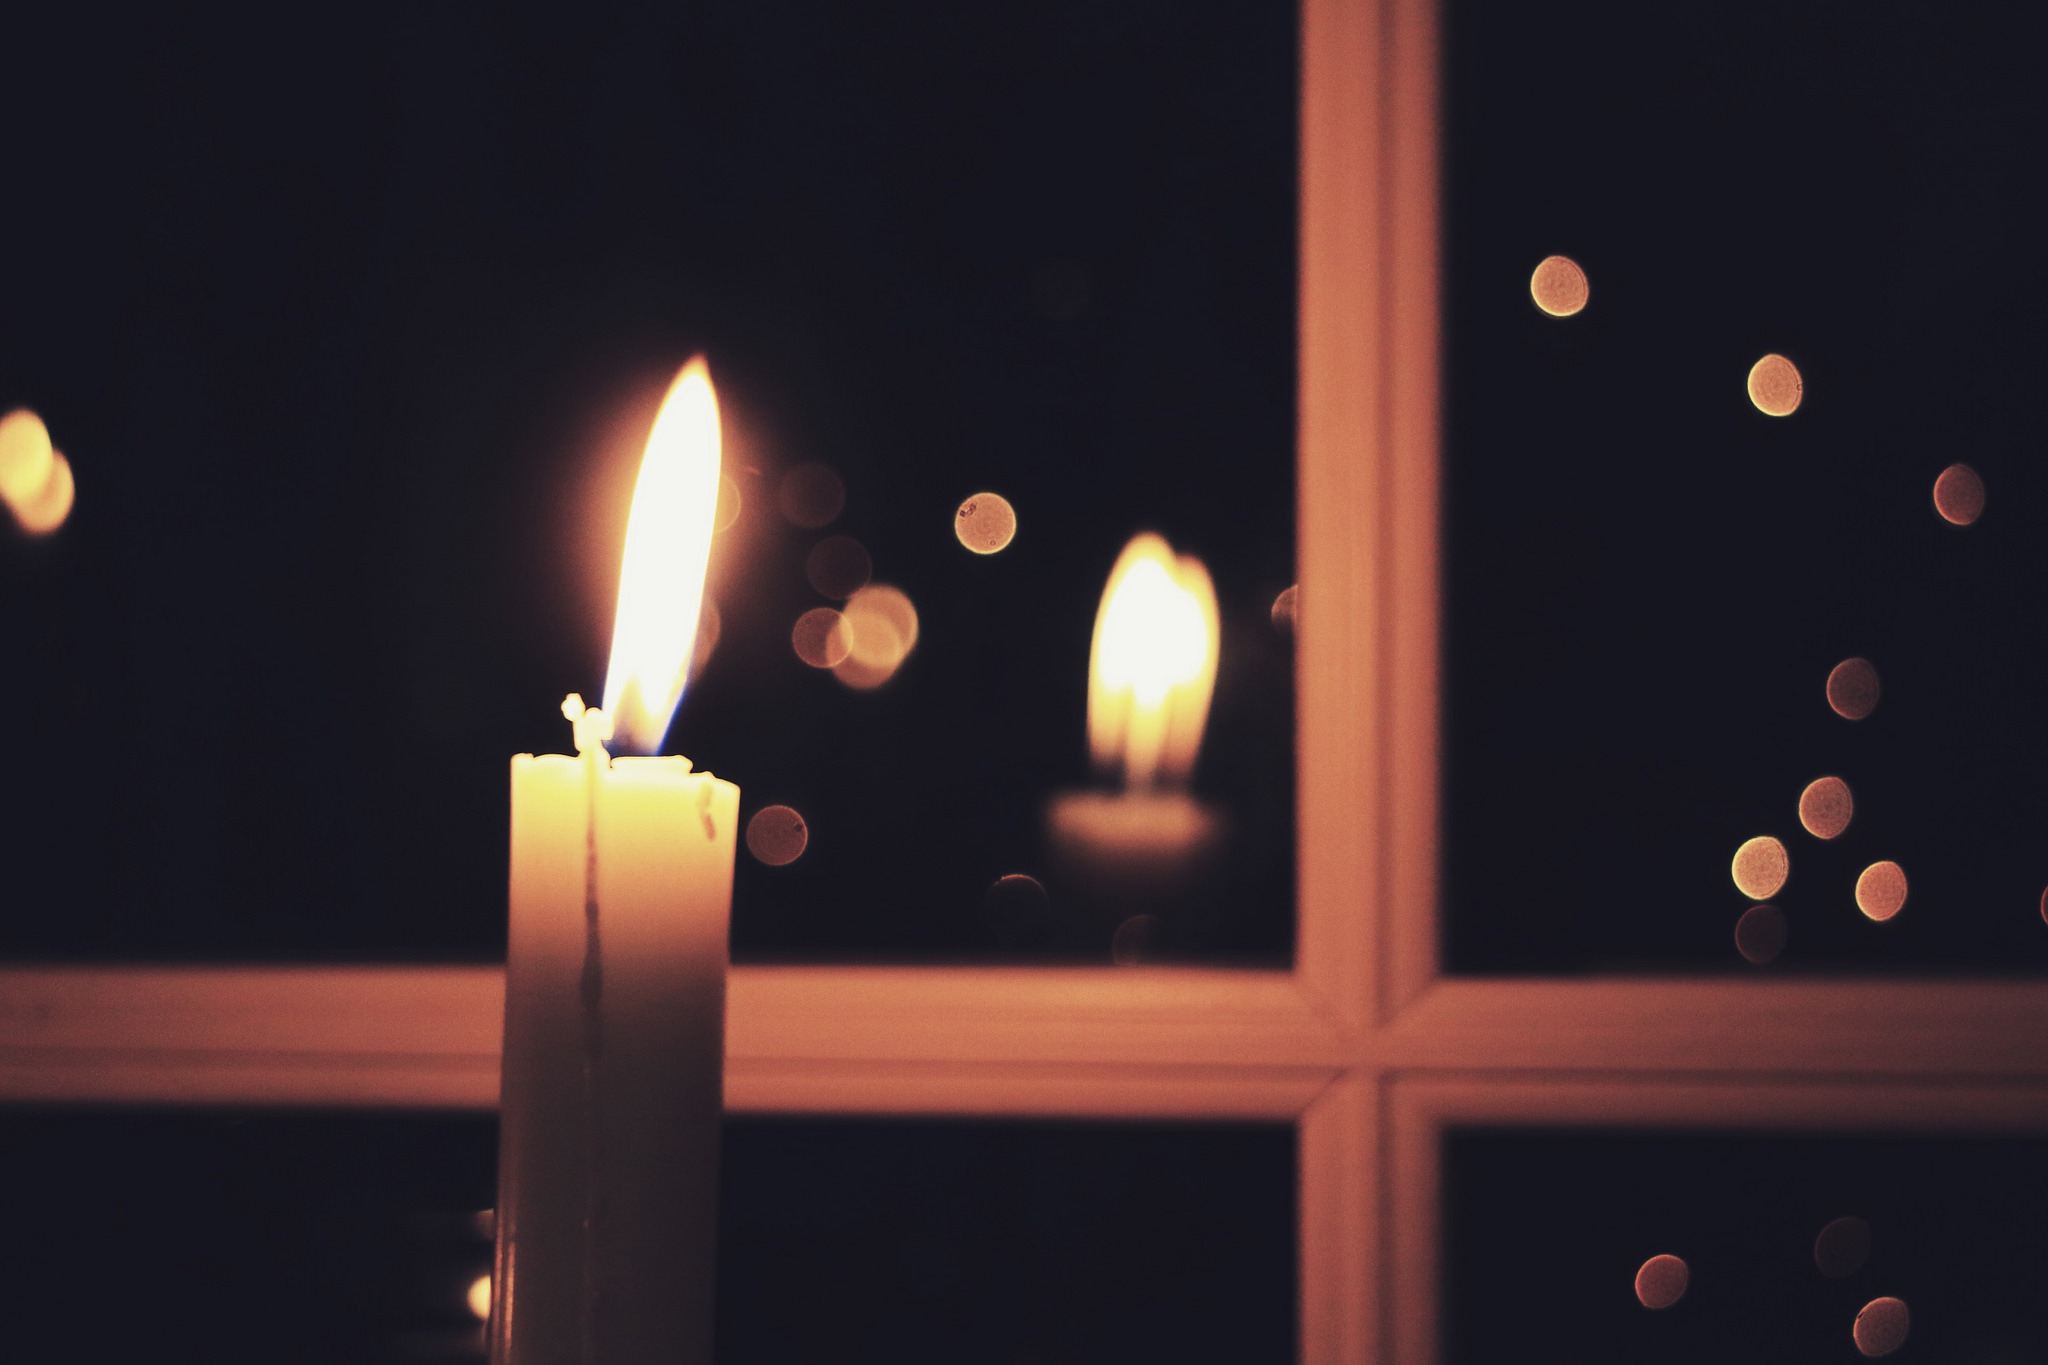 Погасли в окнах свечи. Свеча в окне. Свеча на подоконнике. Горящая свеча на окне. Свеча памяти на окне.